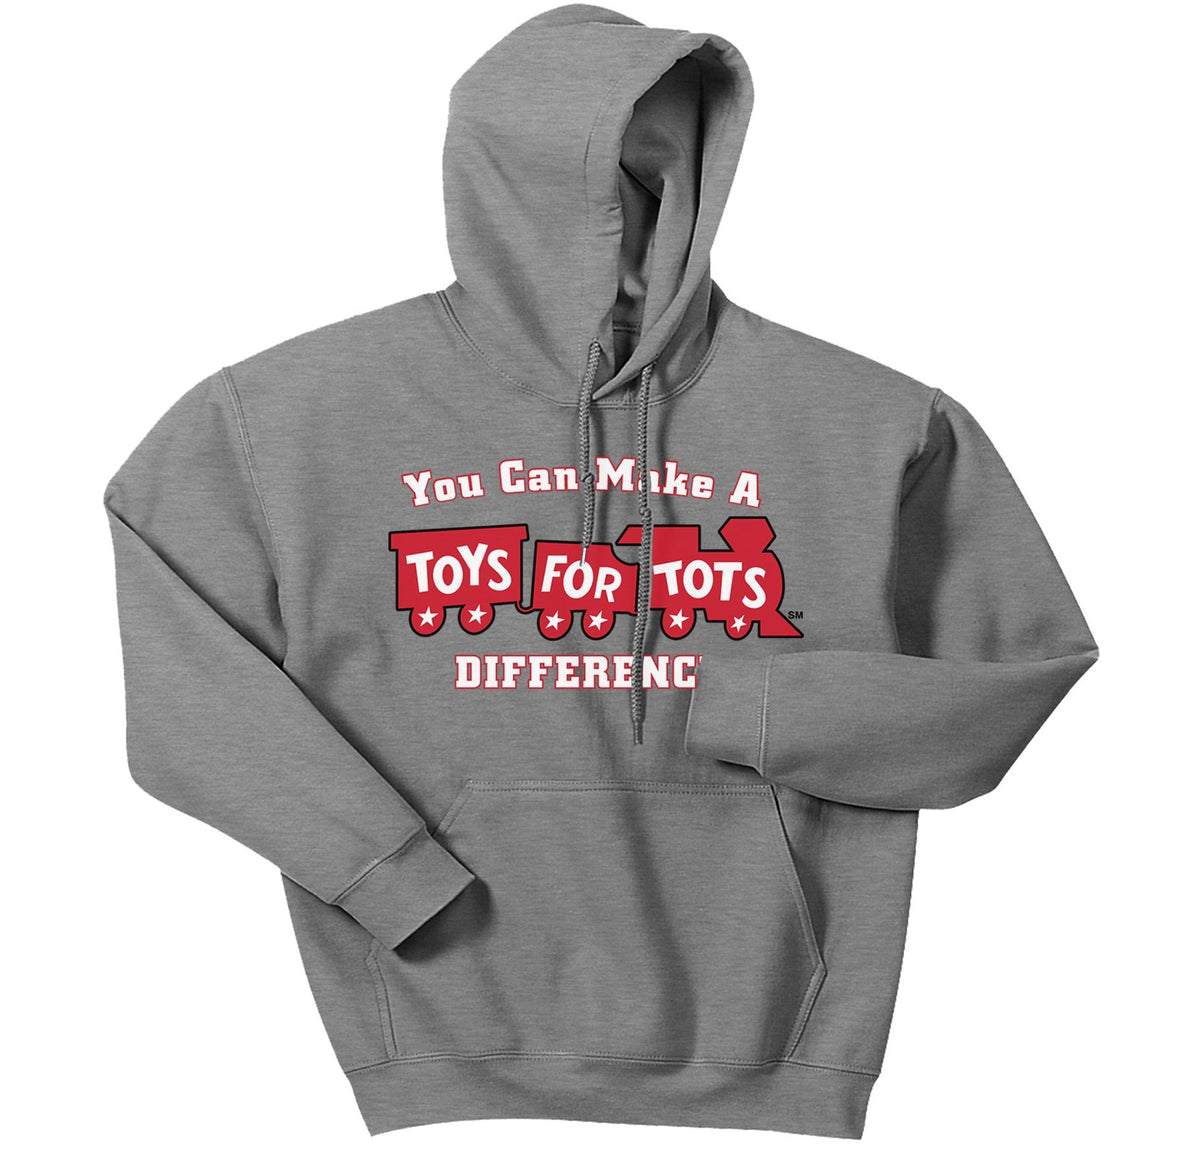 Make a Difference TFT Train Kids Hoodie TFT Sweatshirt/hoodie marinecorpsdirecttft S SPORT GRAY 